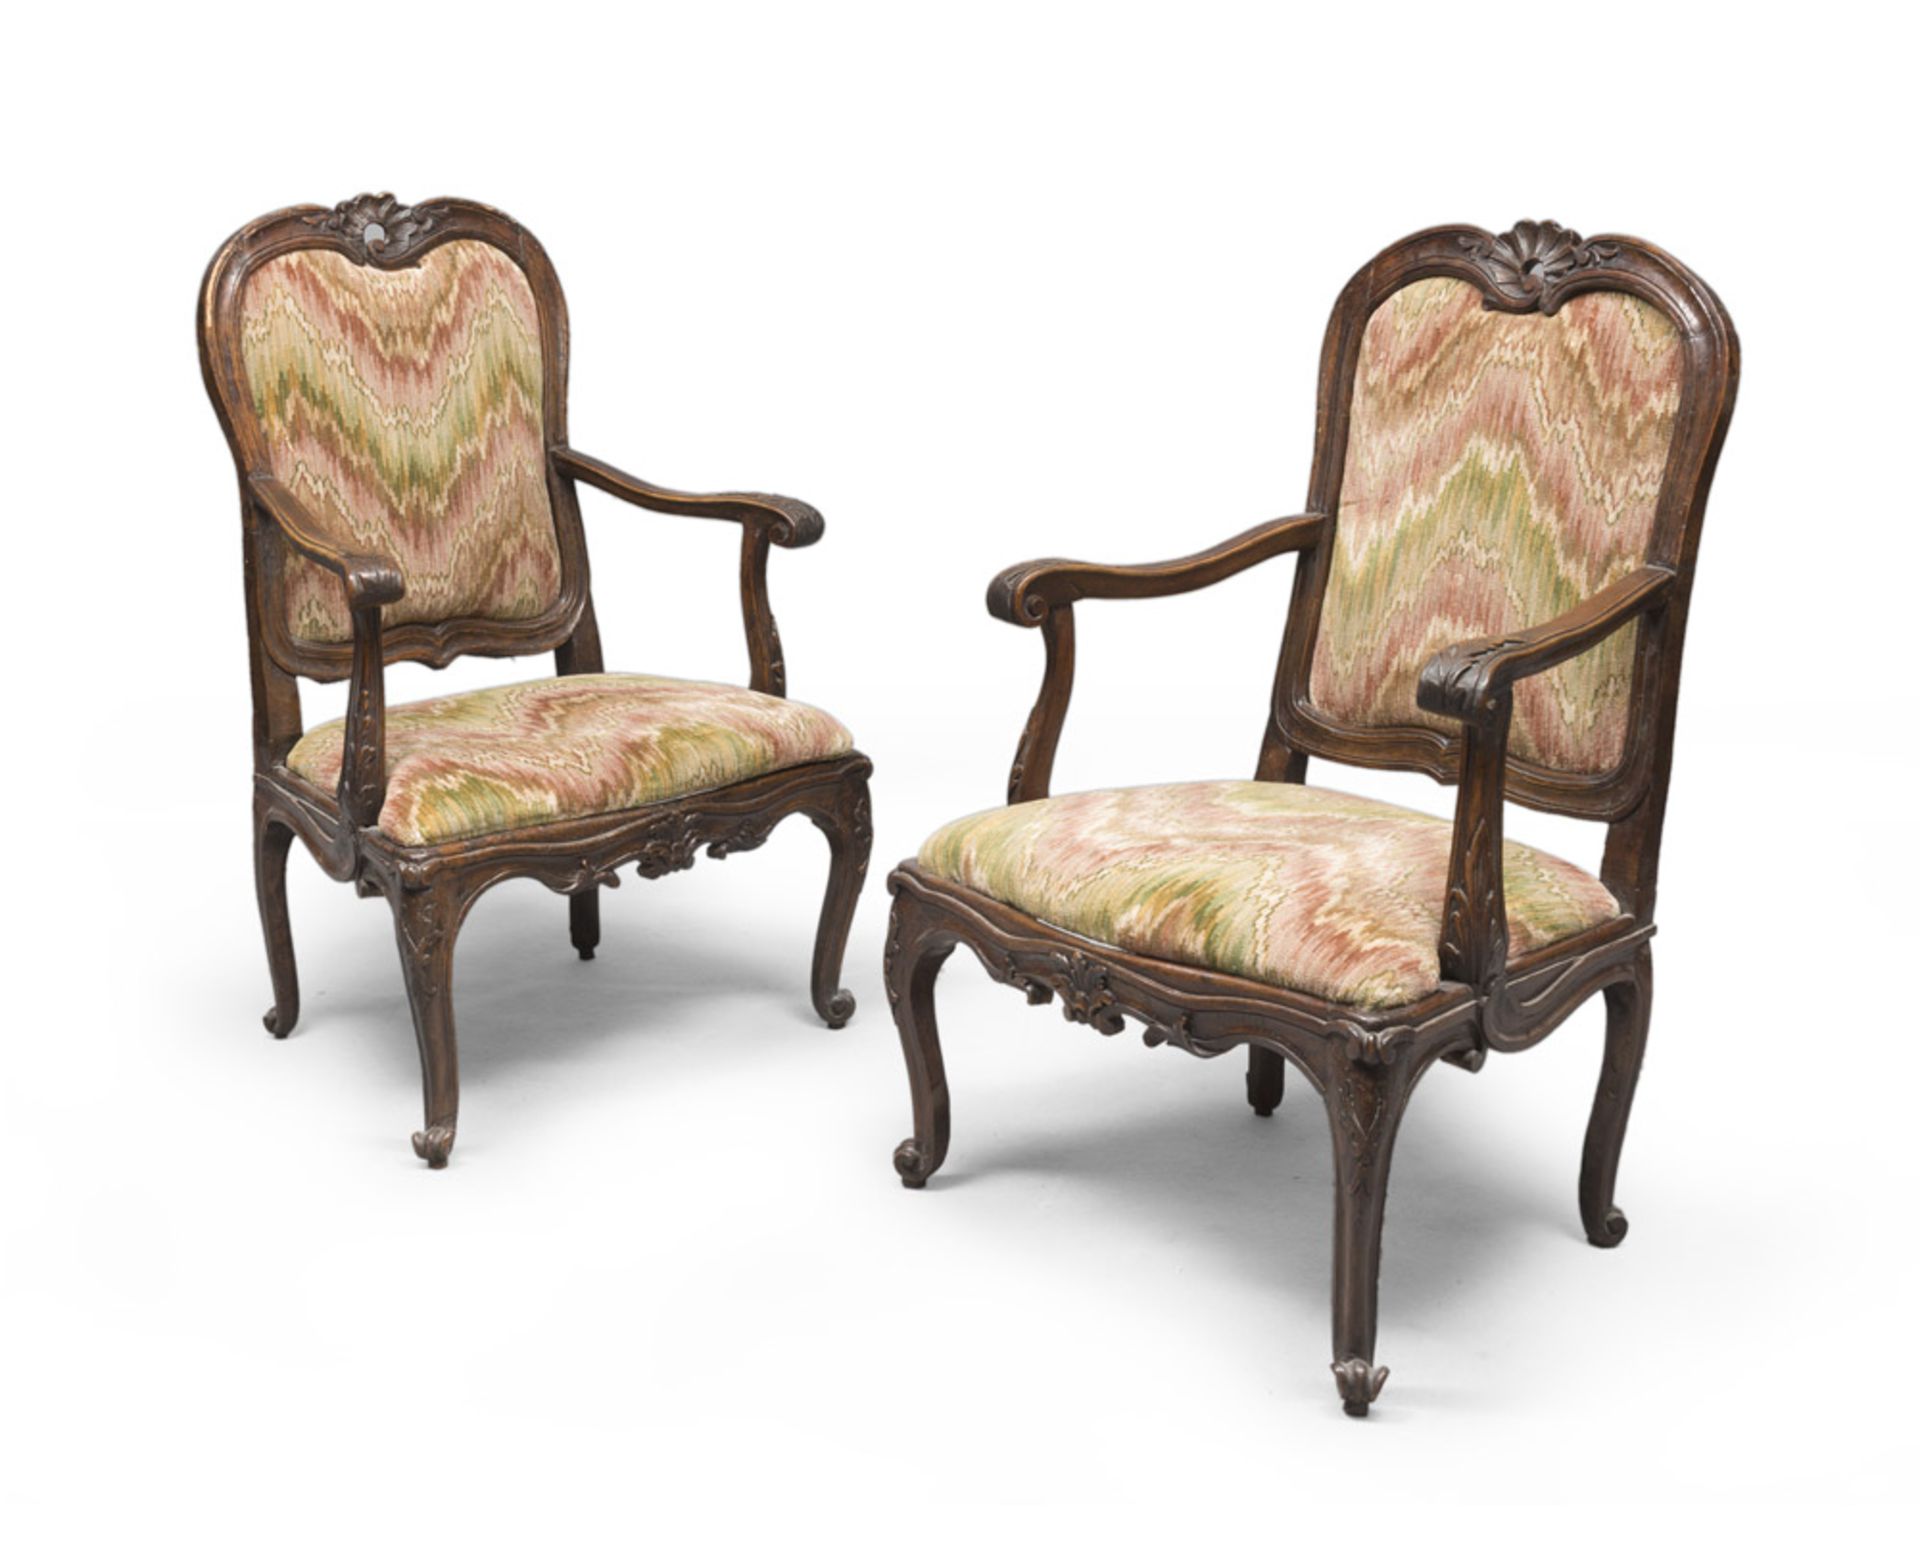 A pair of walnut-tree arm-chairs, Rome 18th century. Measures cm. 110 x 70 x 60.BELLA COPPIA DI